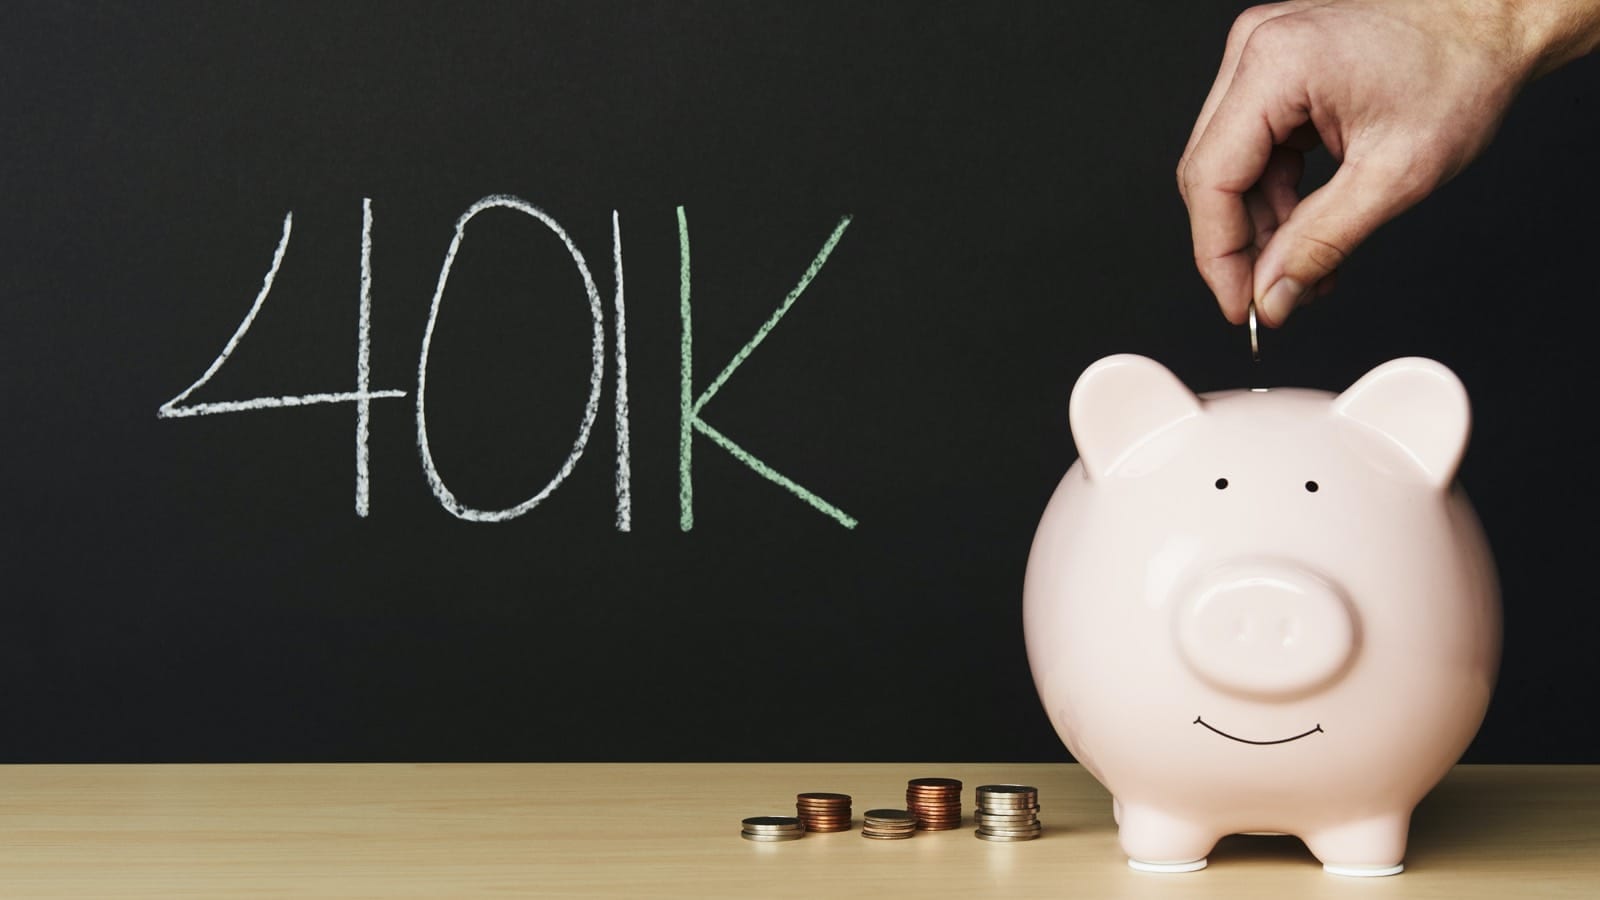 401(k) savings account